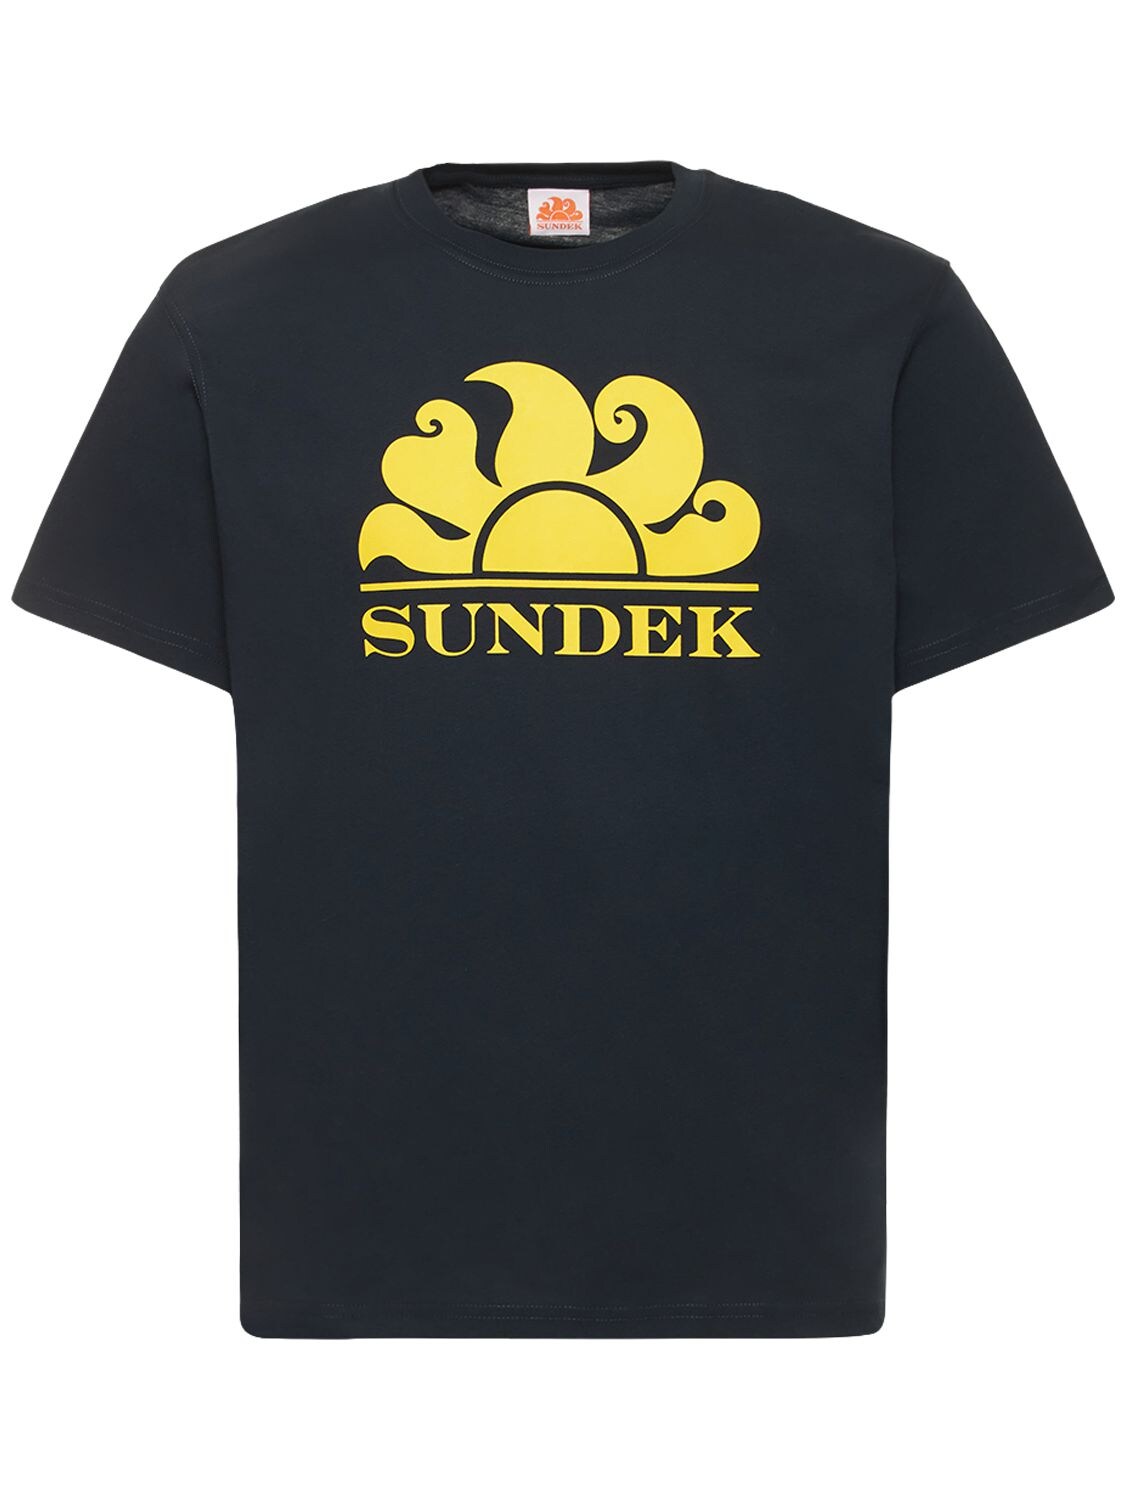 Sundek Logo Print Cotton Jersey T-shirt In Navy,yellow